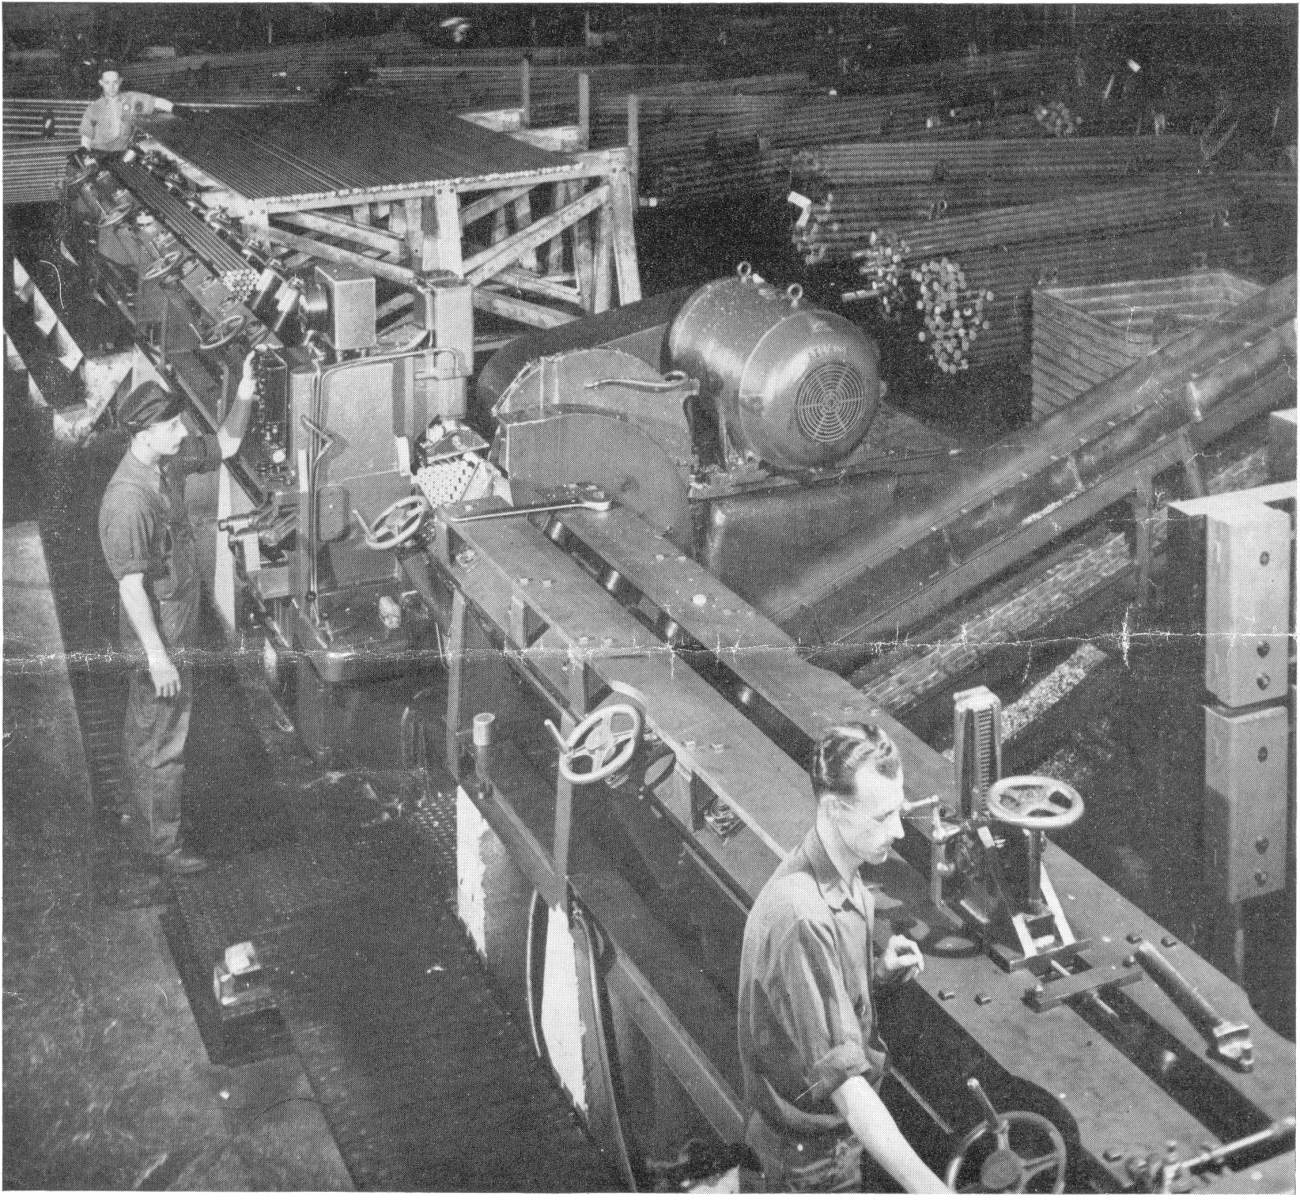 Sawing Unit Cutting Rod [MA-1-8-1945]